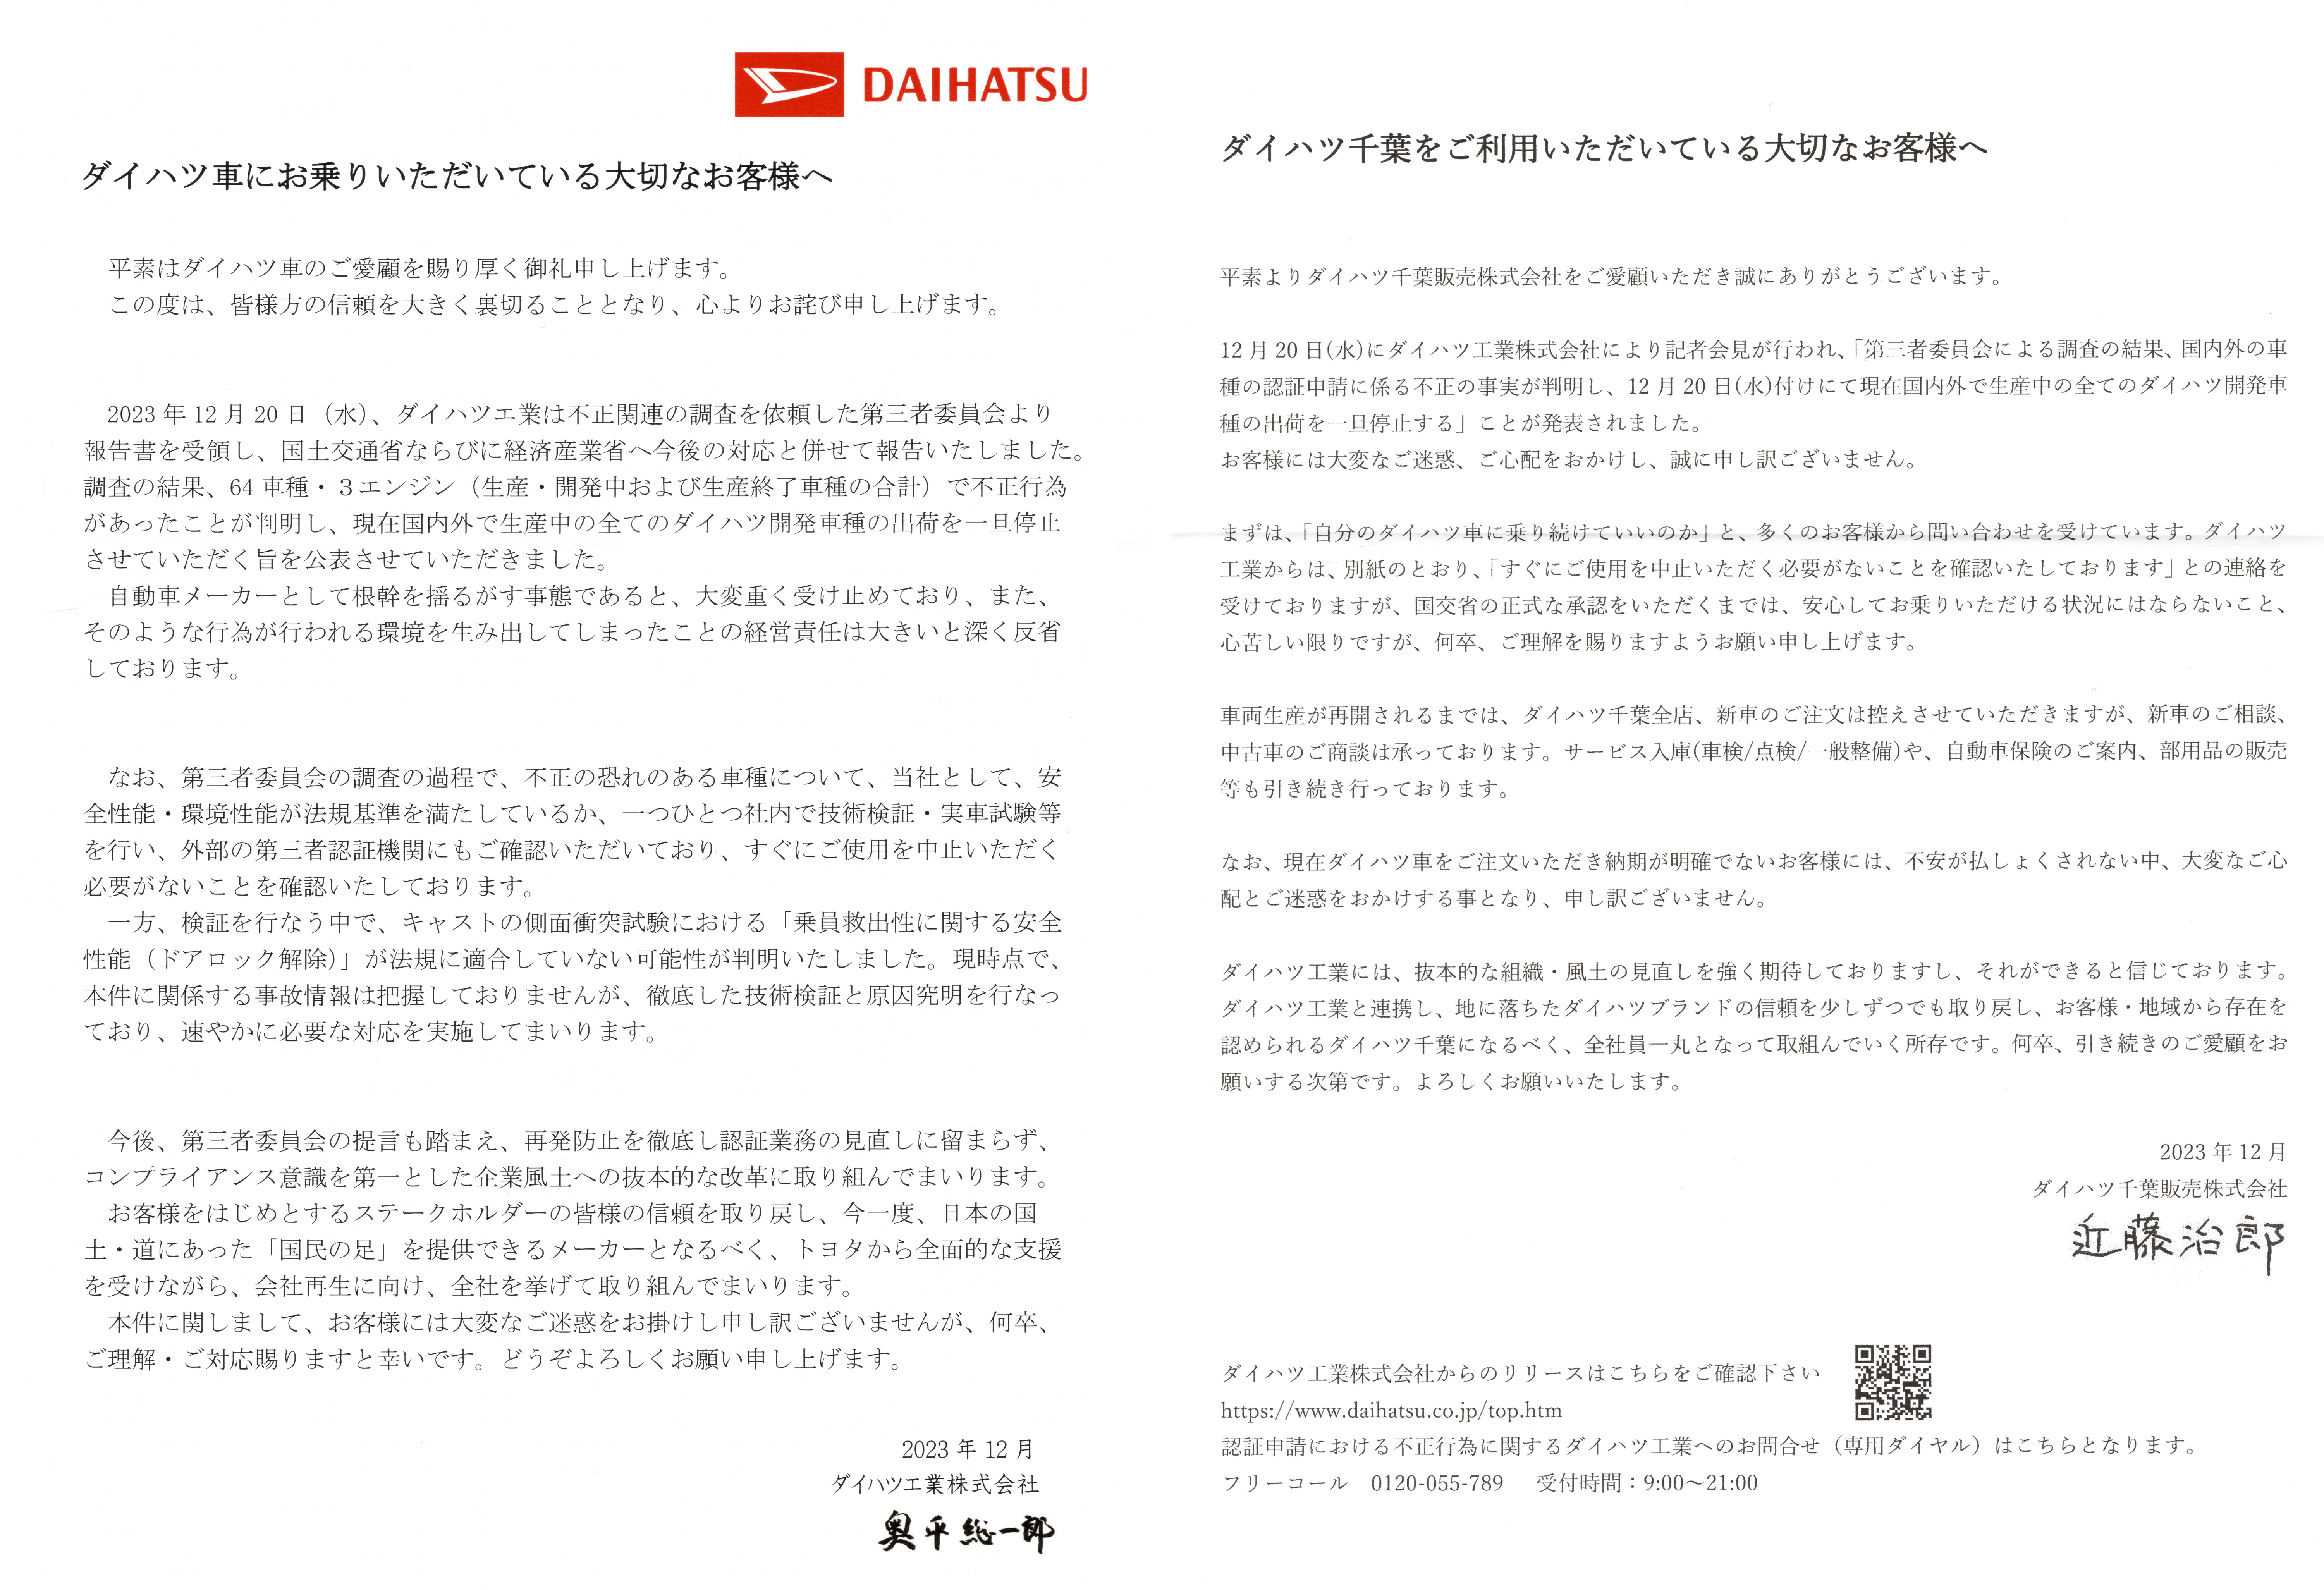 Daihatsu's Statement and Apology